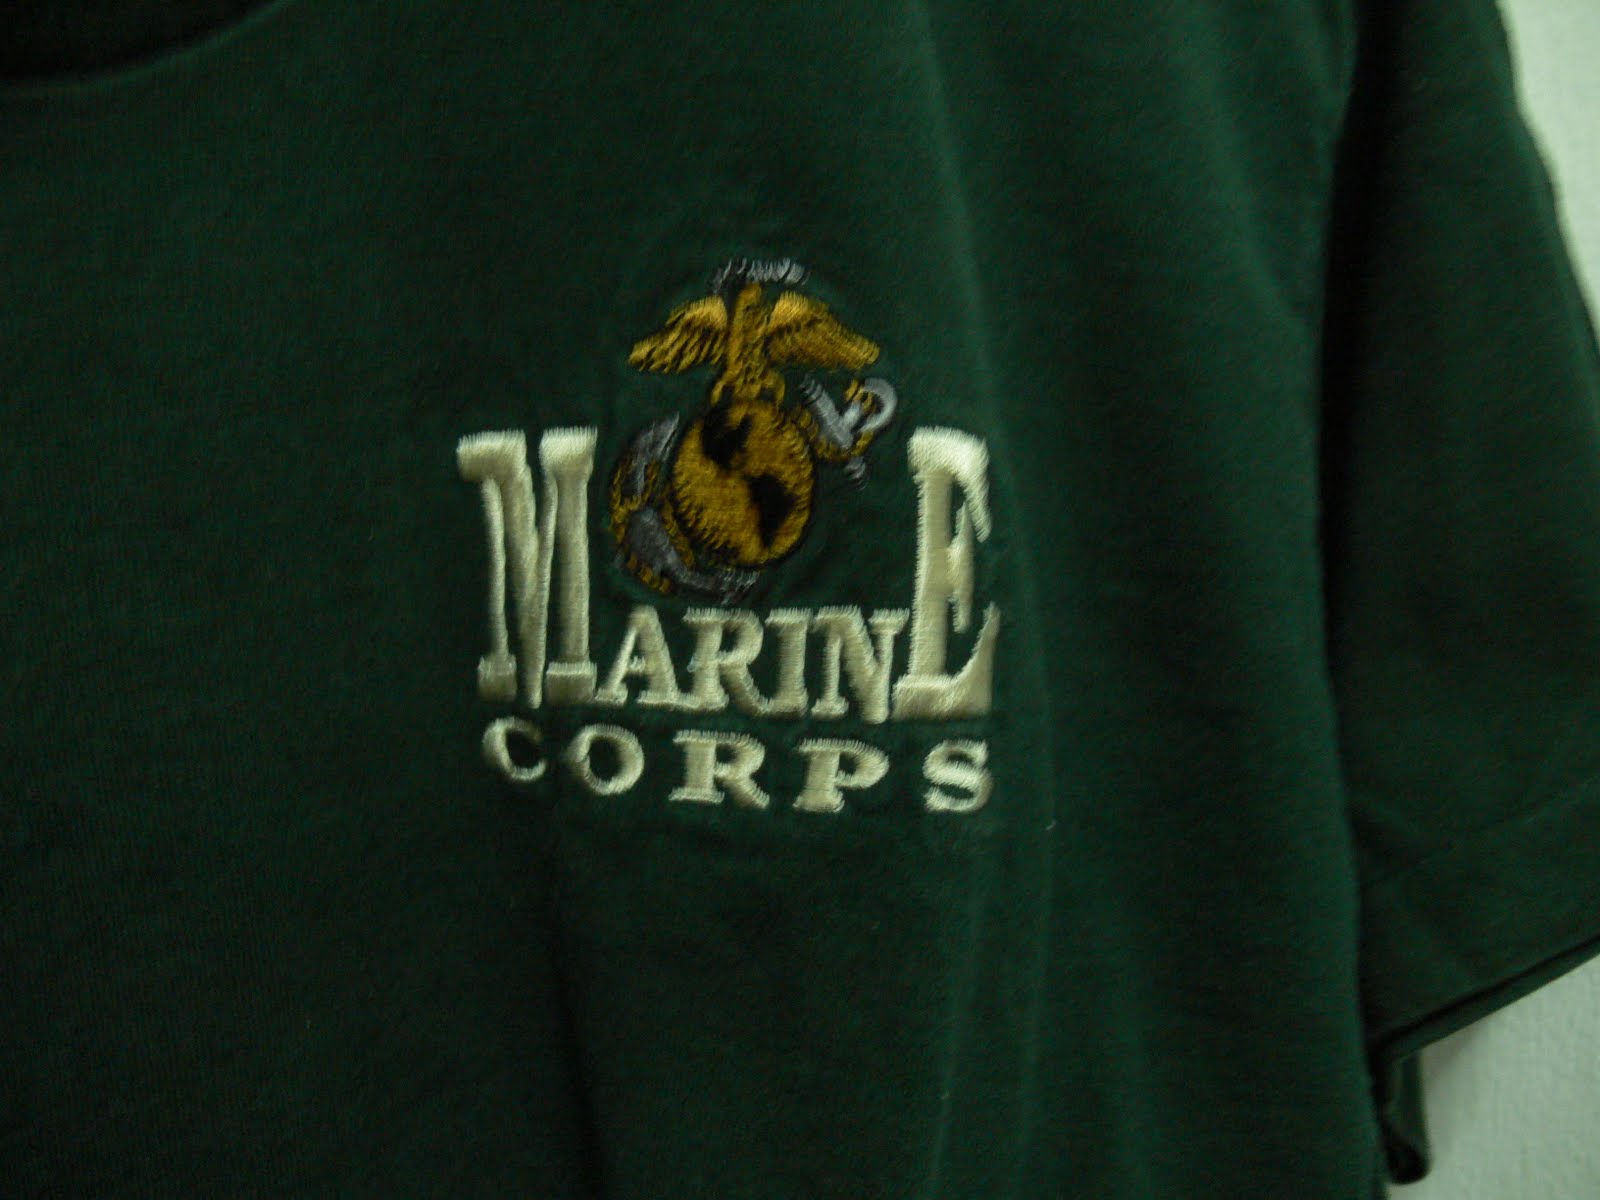 House of the Brave: USMC MARINE CORPS T-shirt